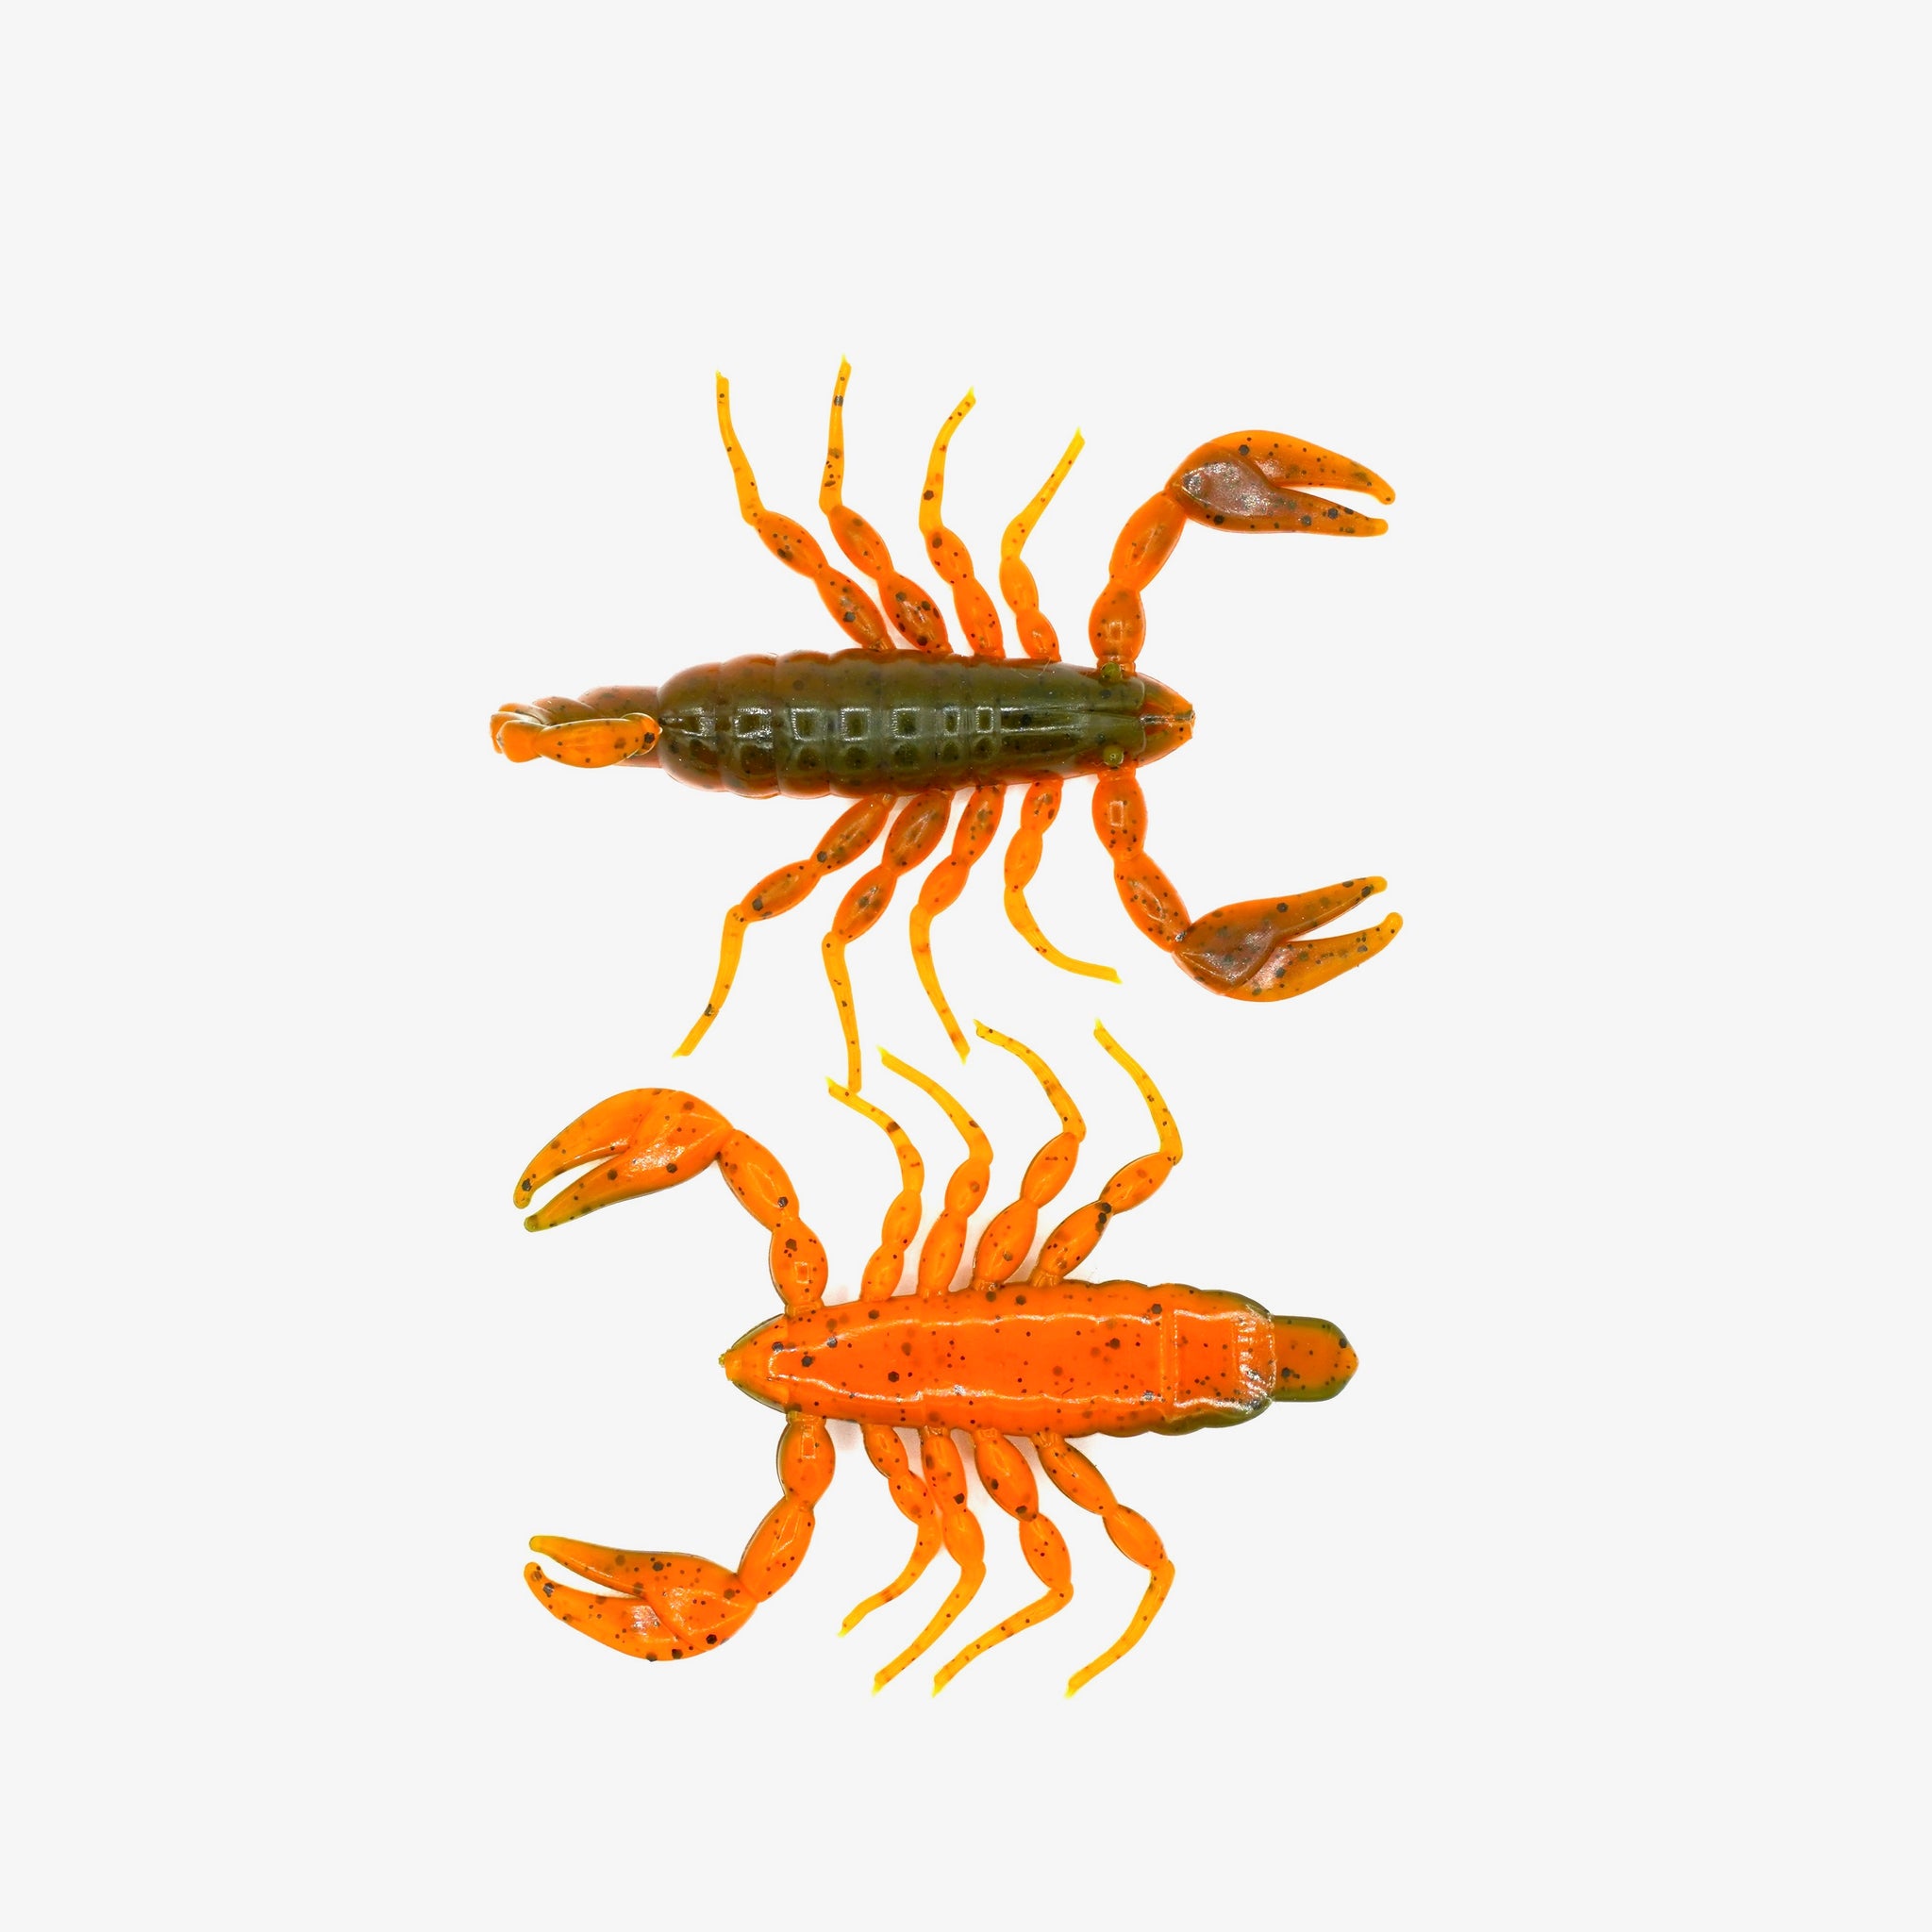 New species on the scorpion😂 #freshbaitz #getbenttv #scorpionbait #cu